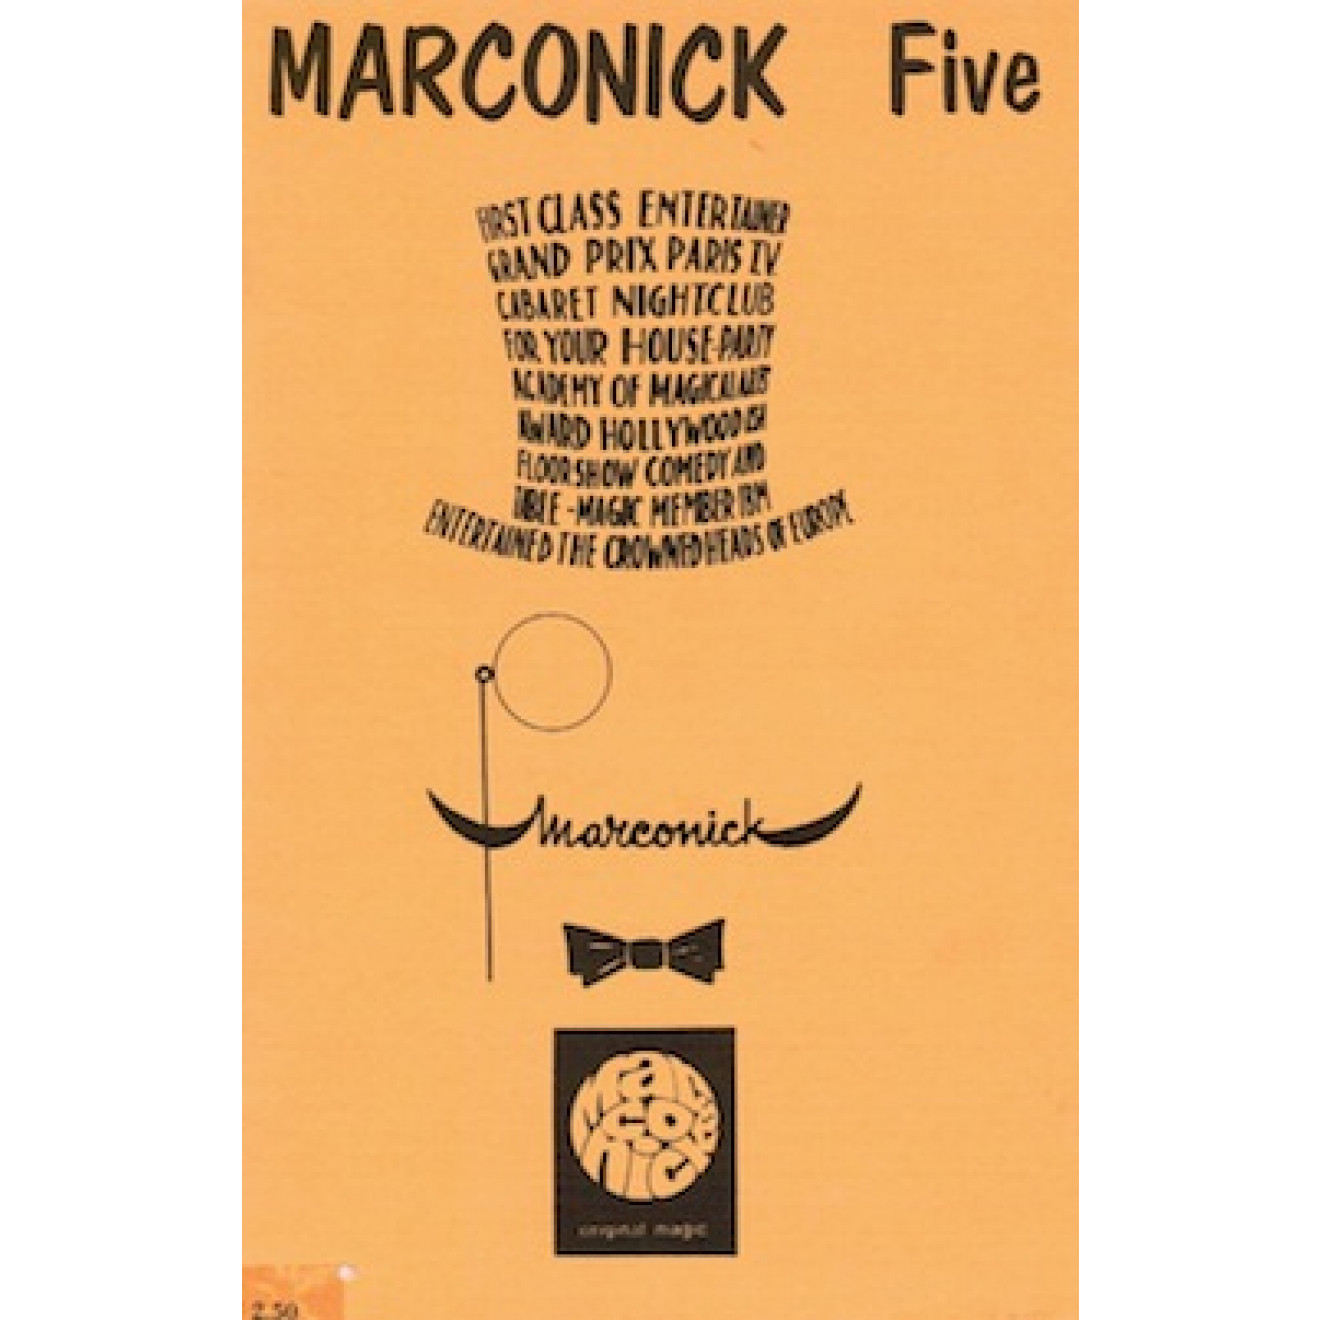 Marconick's Original Magic 5